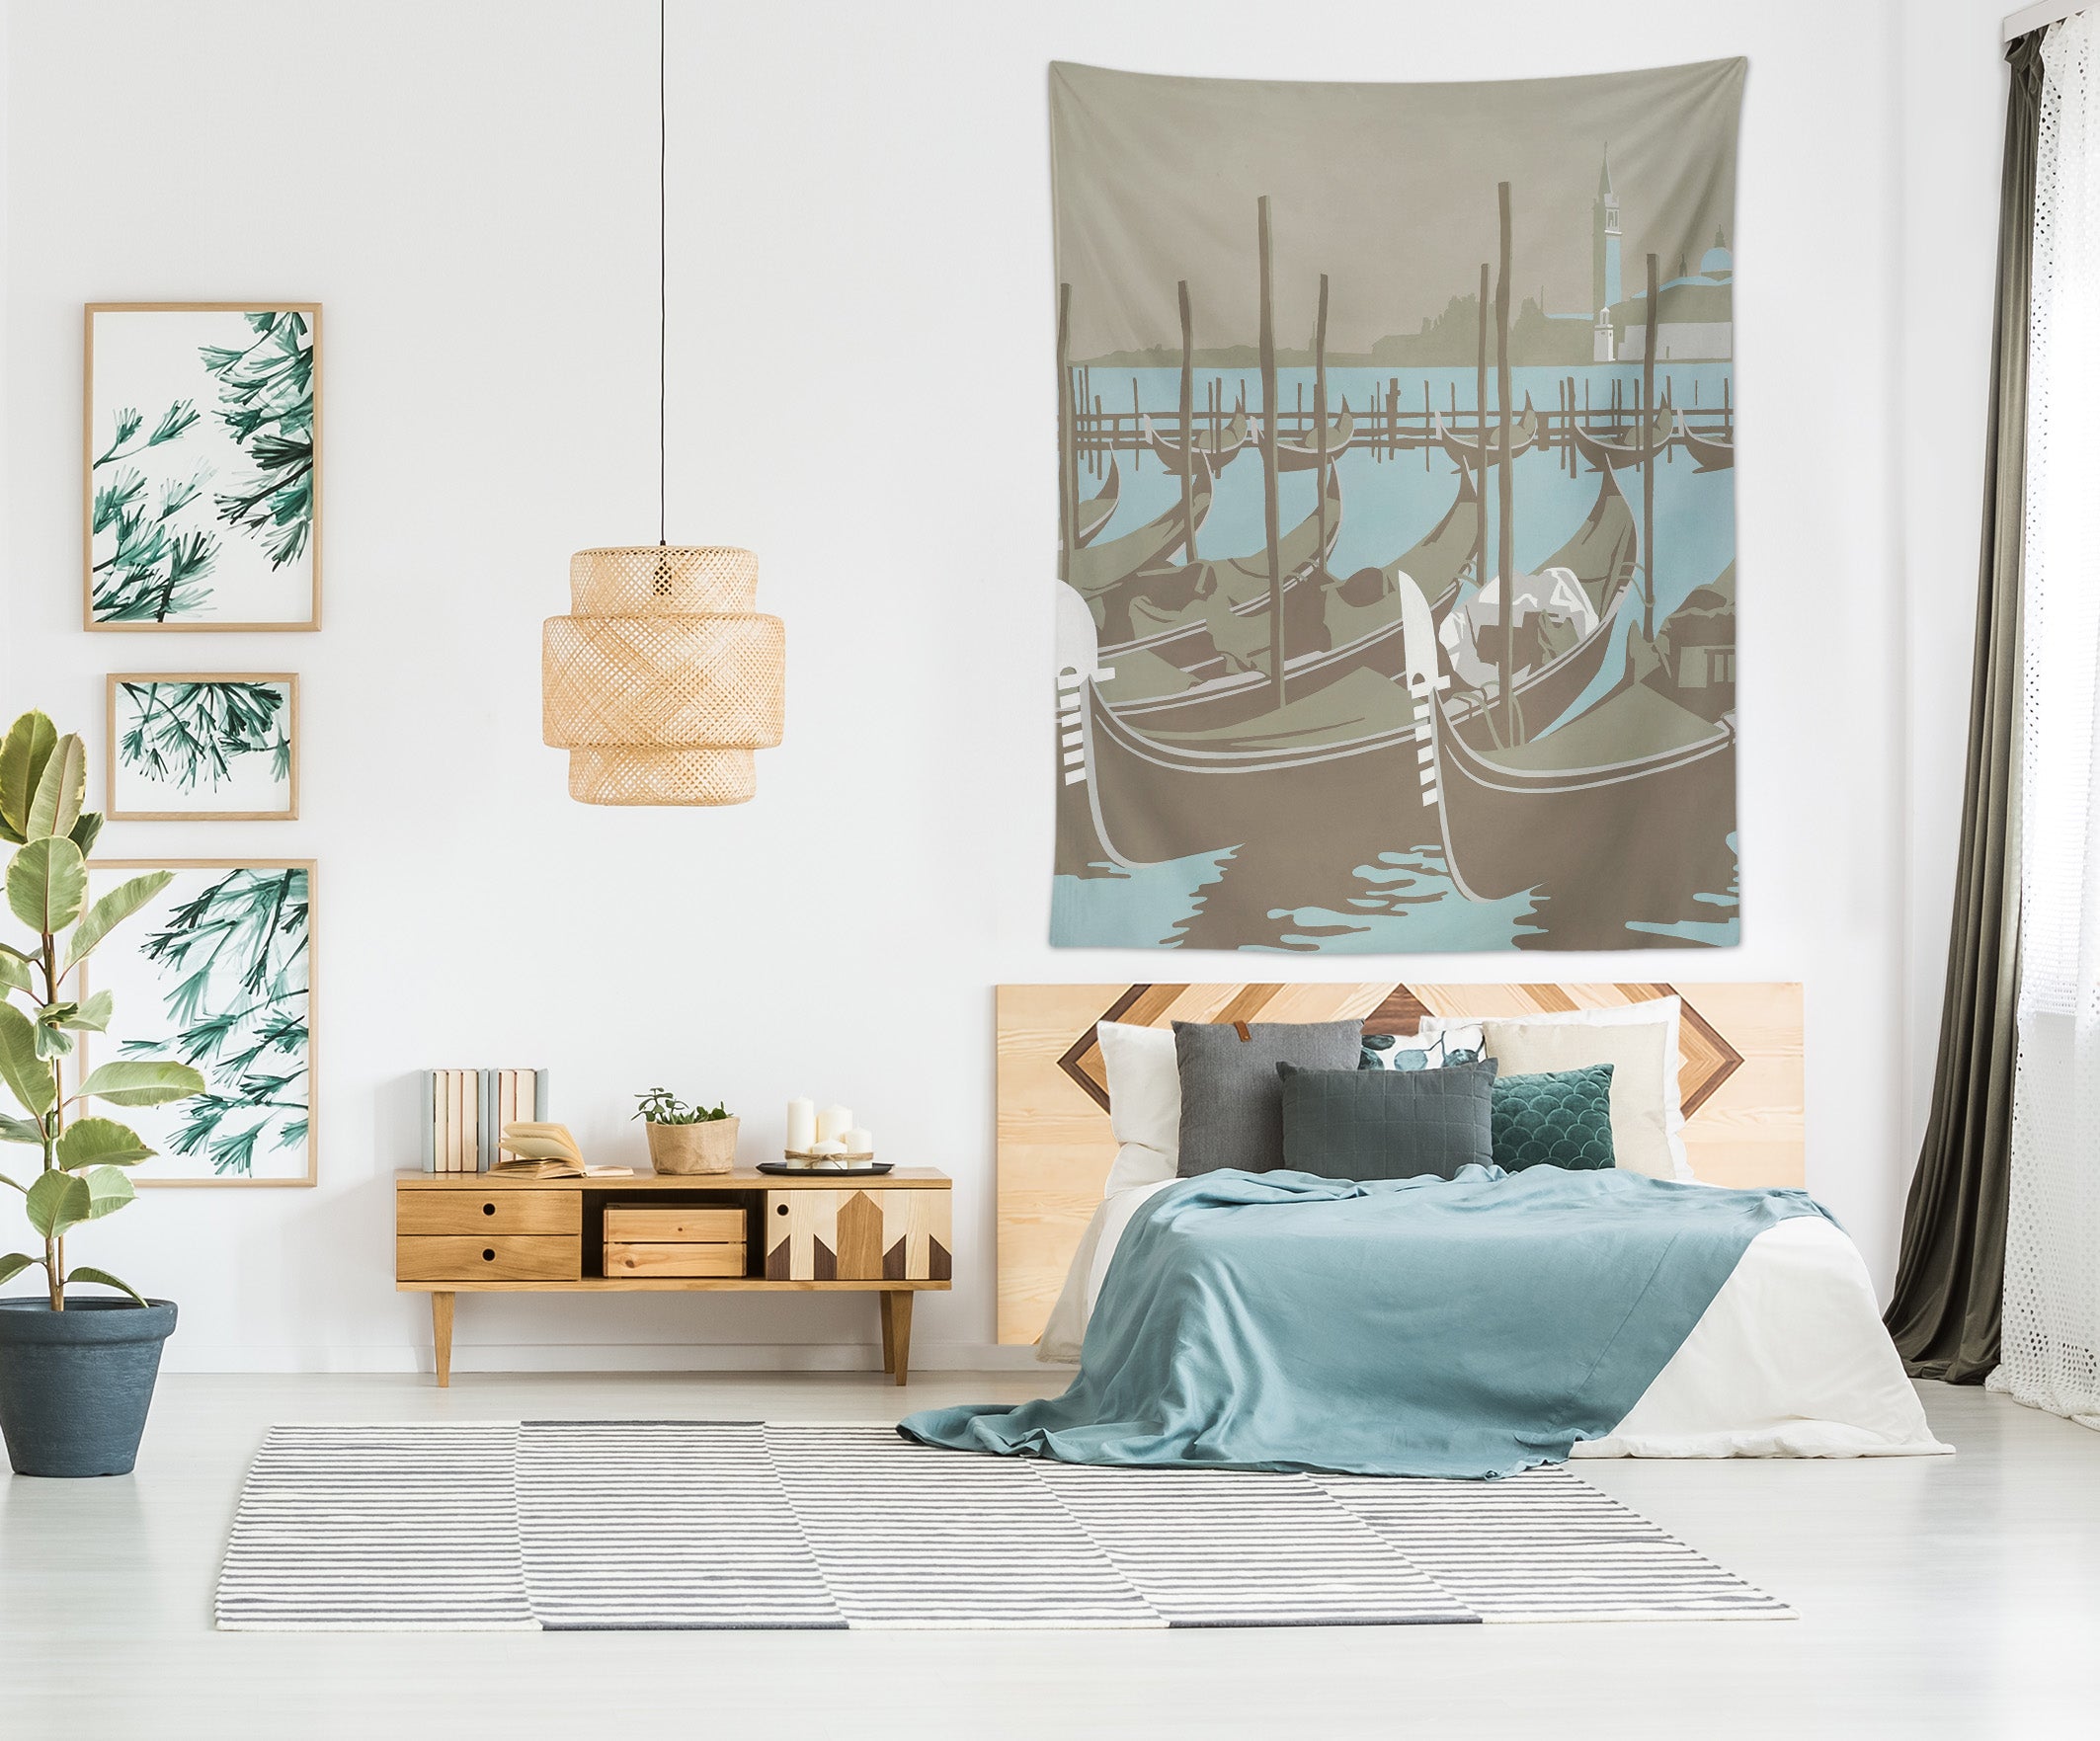 3D Venetian Boat 5395 Steve Read Tapestry Hanging Cloth Hang